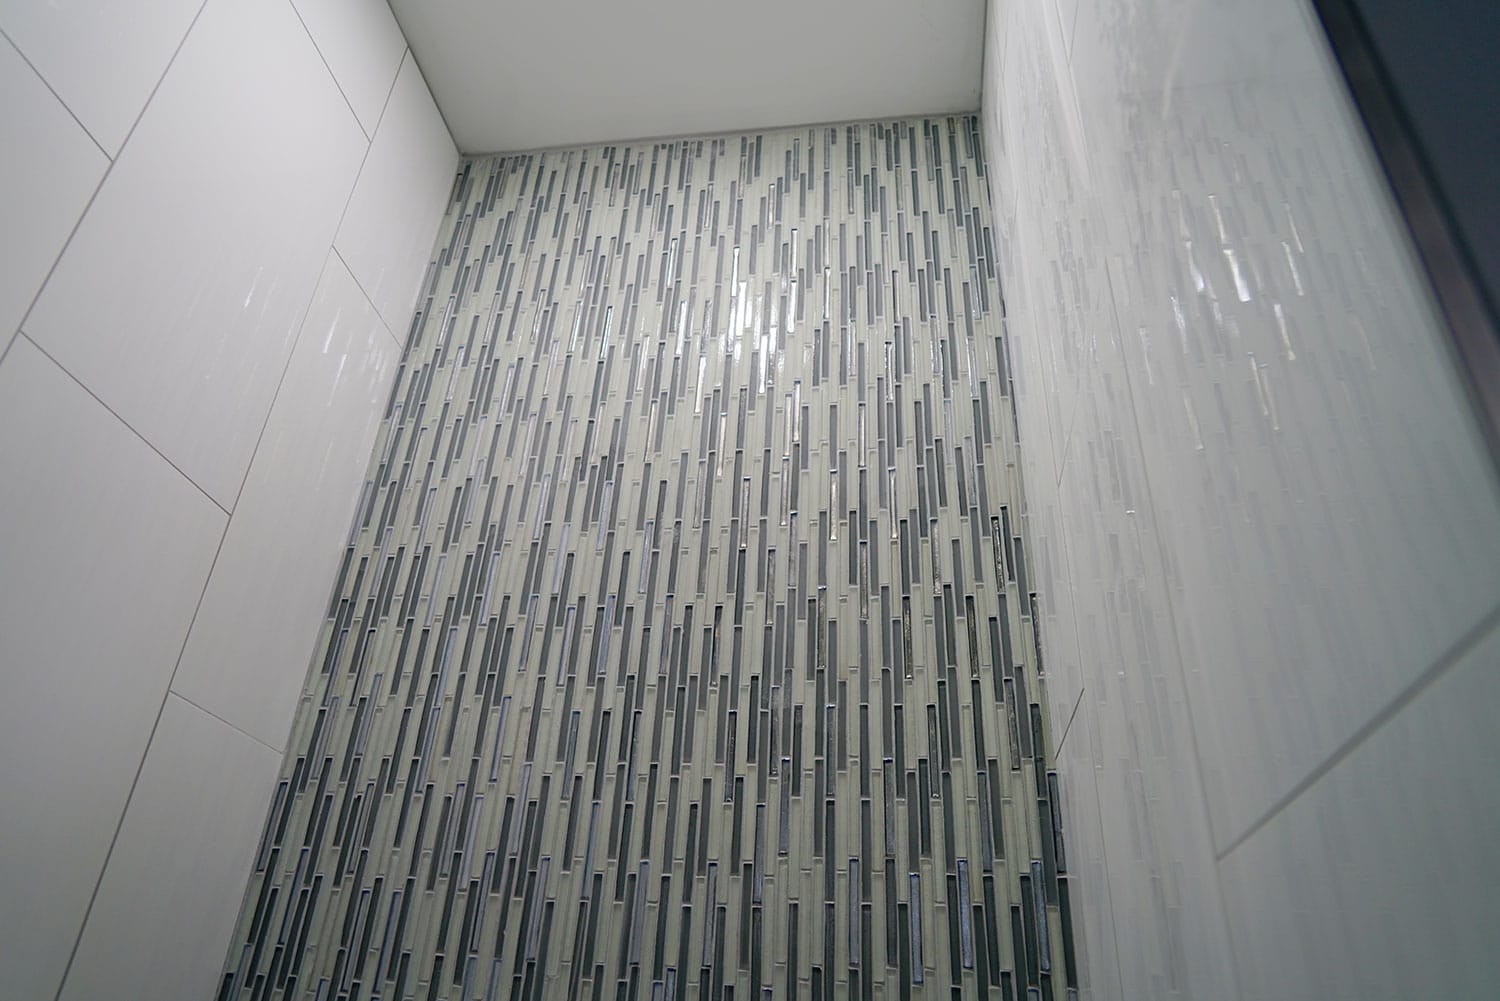 Shower walls with modern glass mosaic tiles.